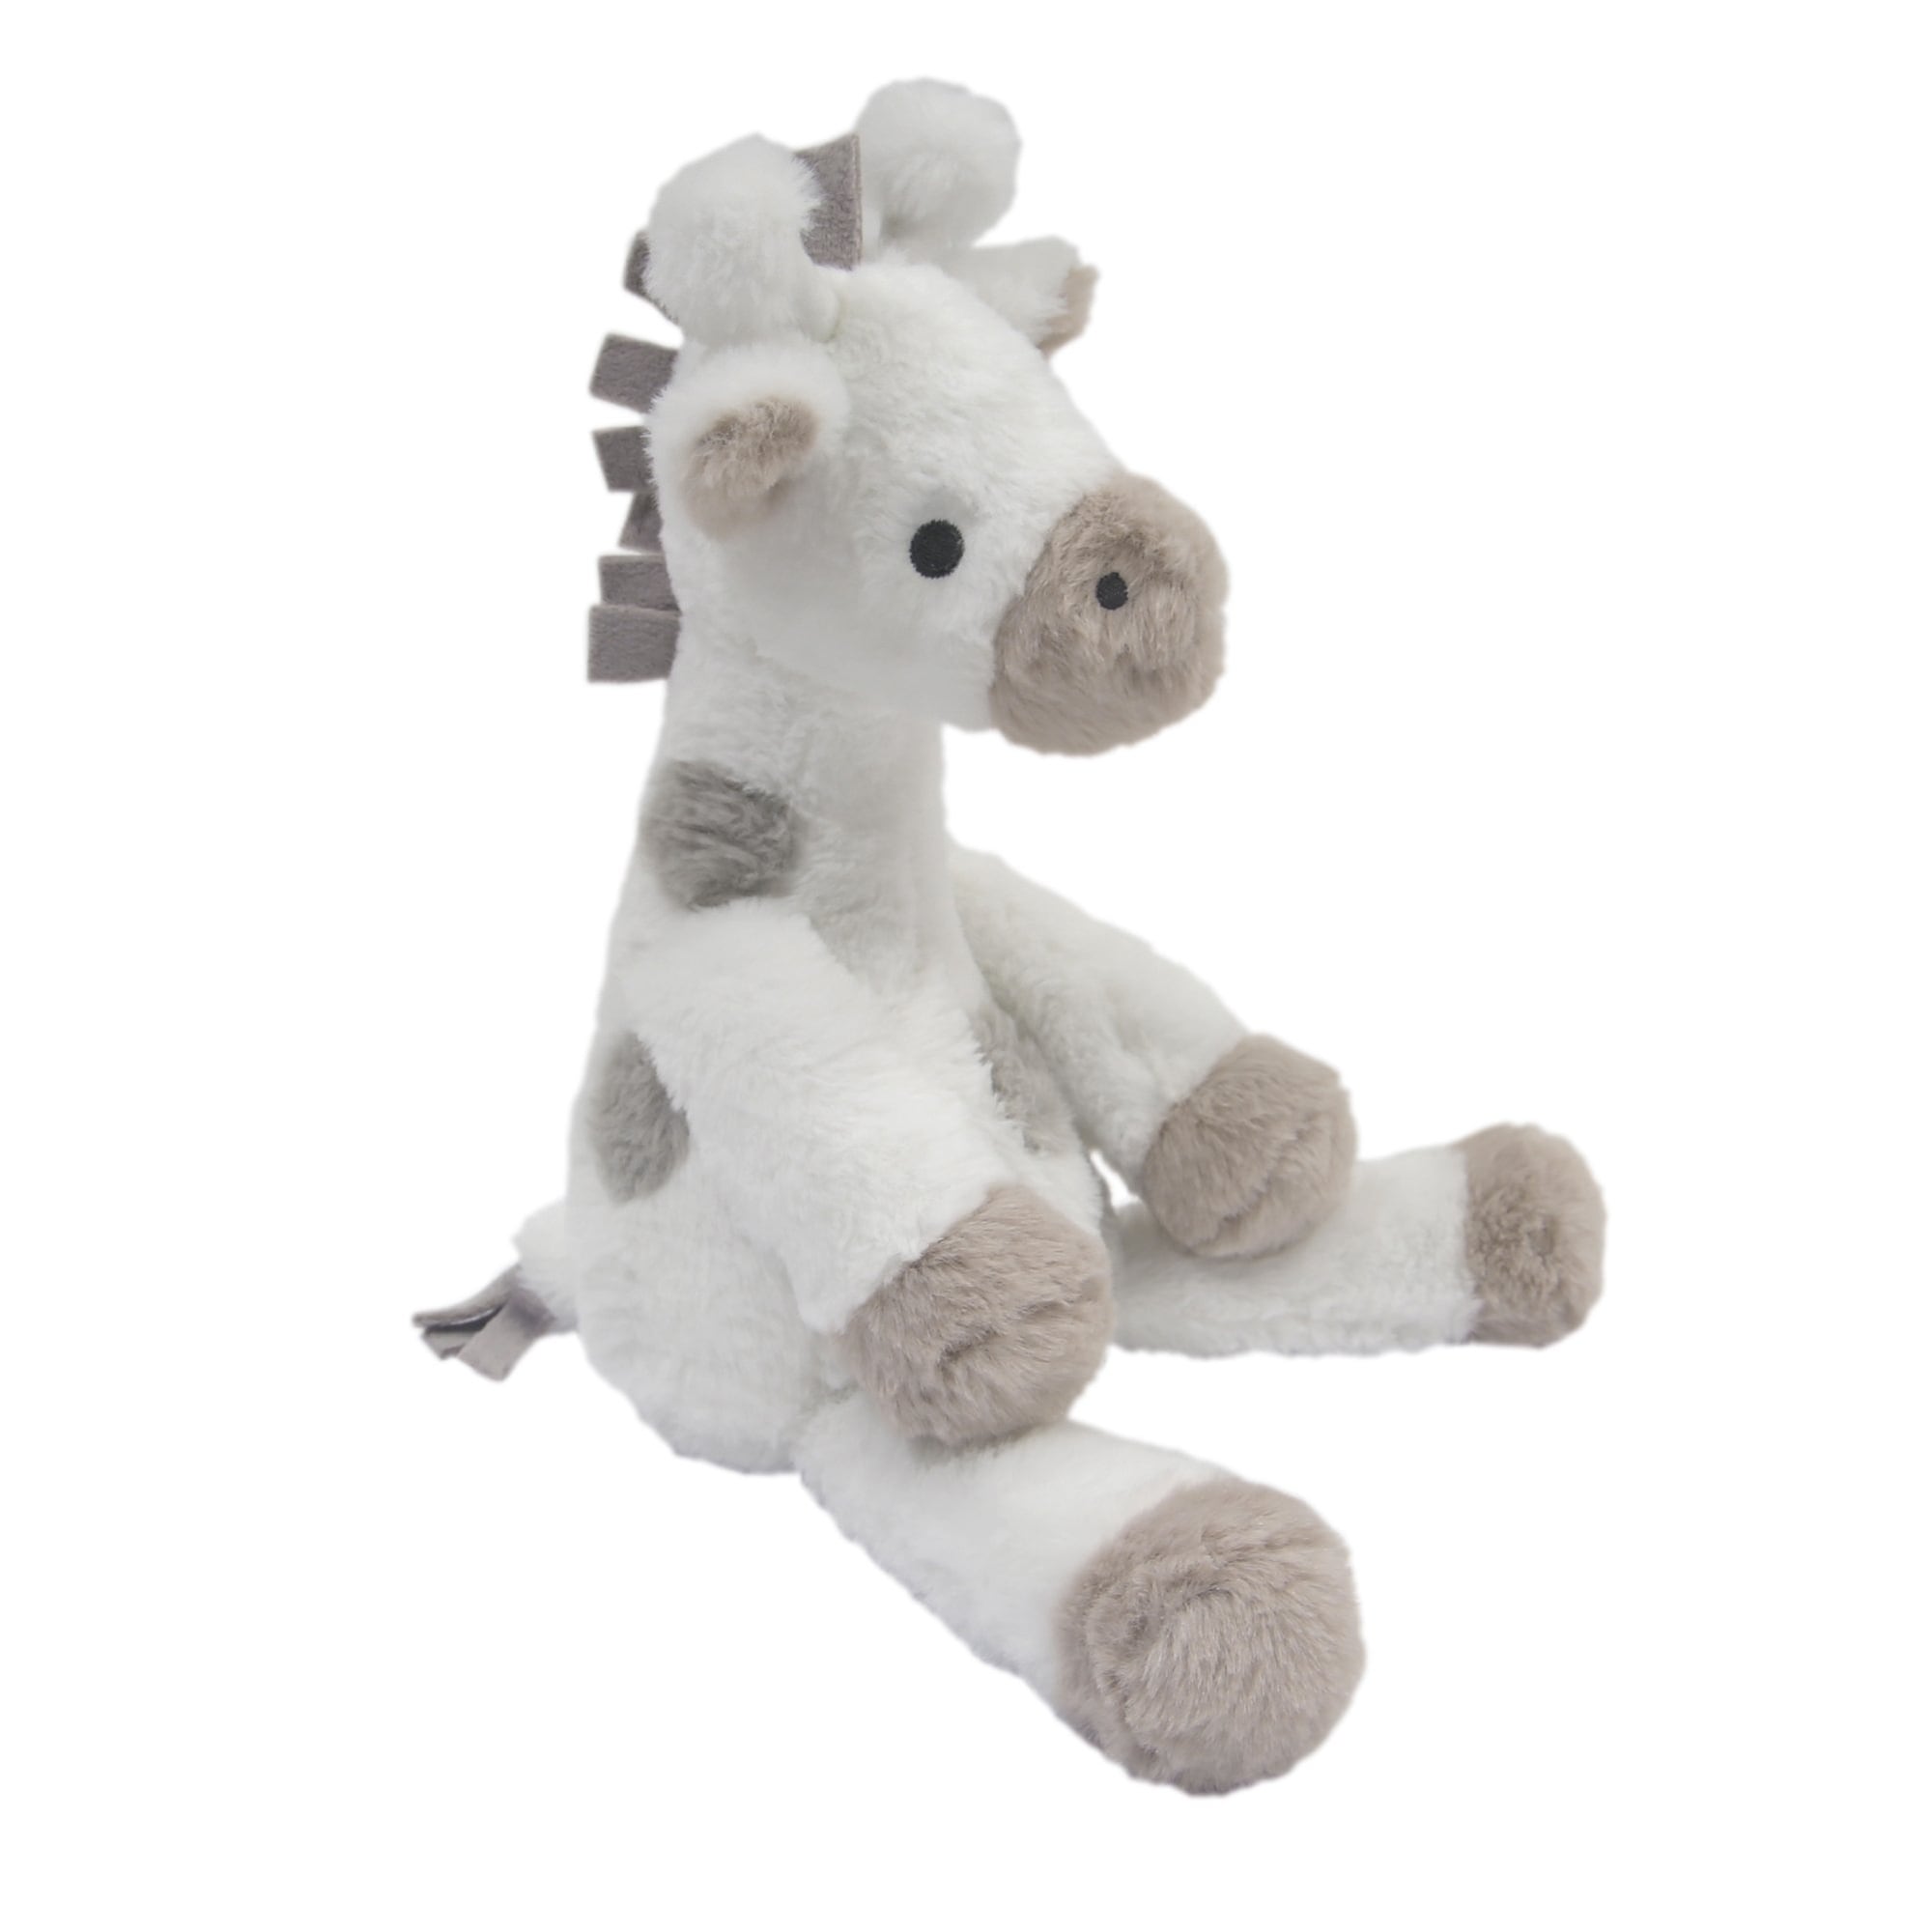 soft giraffe stuffed animal